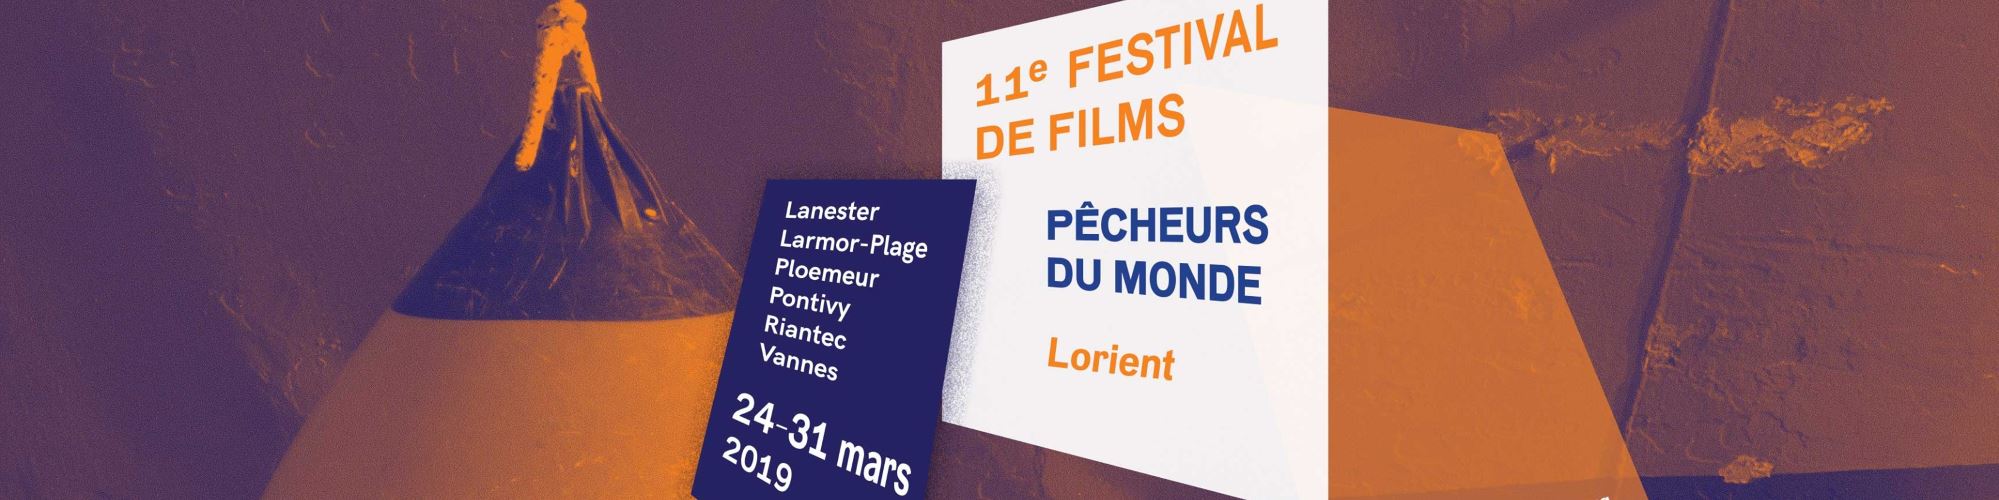 Festival films Pêcheurs du monde